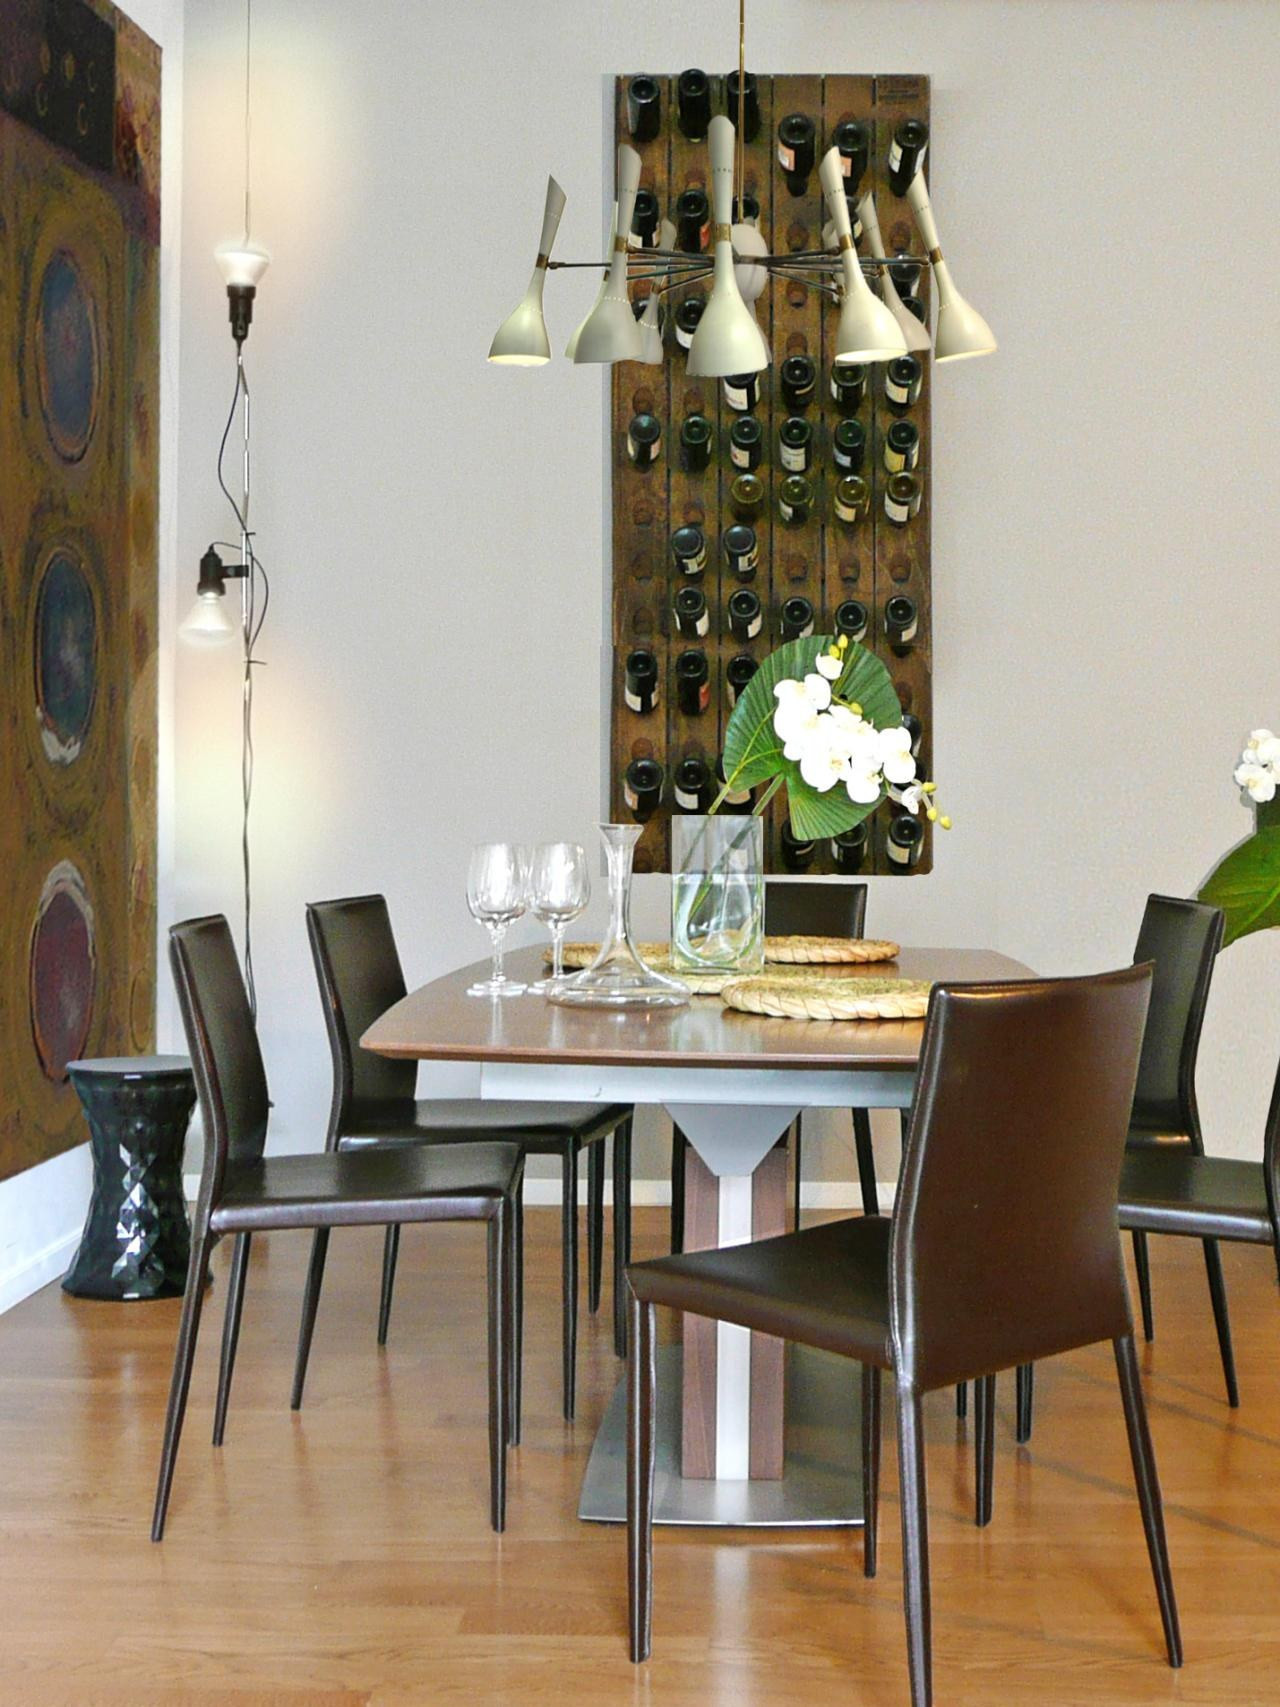 Hgtv Hardwood Floors Ideas Of 39 Elegant Wayfair Hgtv Creative Lighting Ideas for Home with S Hgtv Inspiring Dining Room Cabinet with Wine